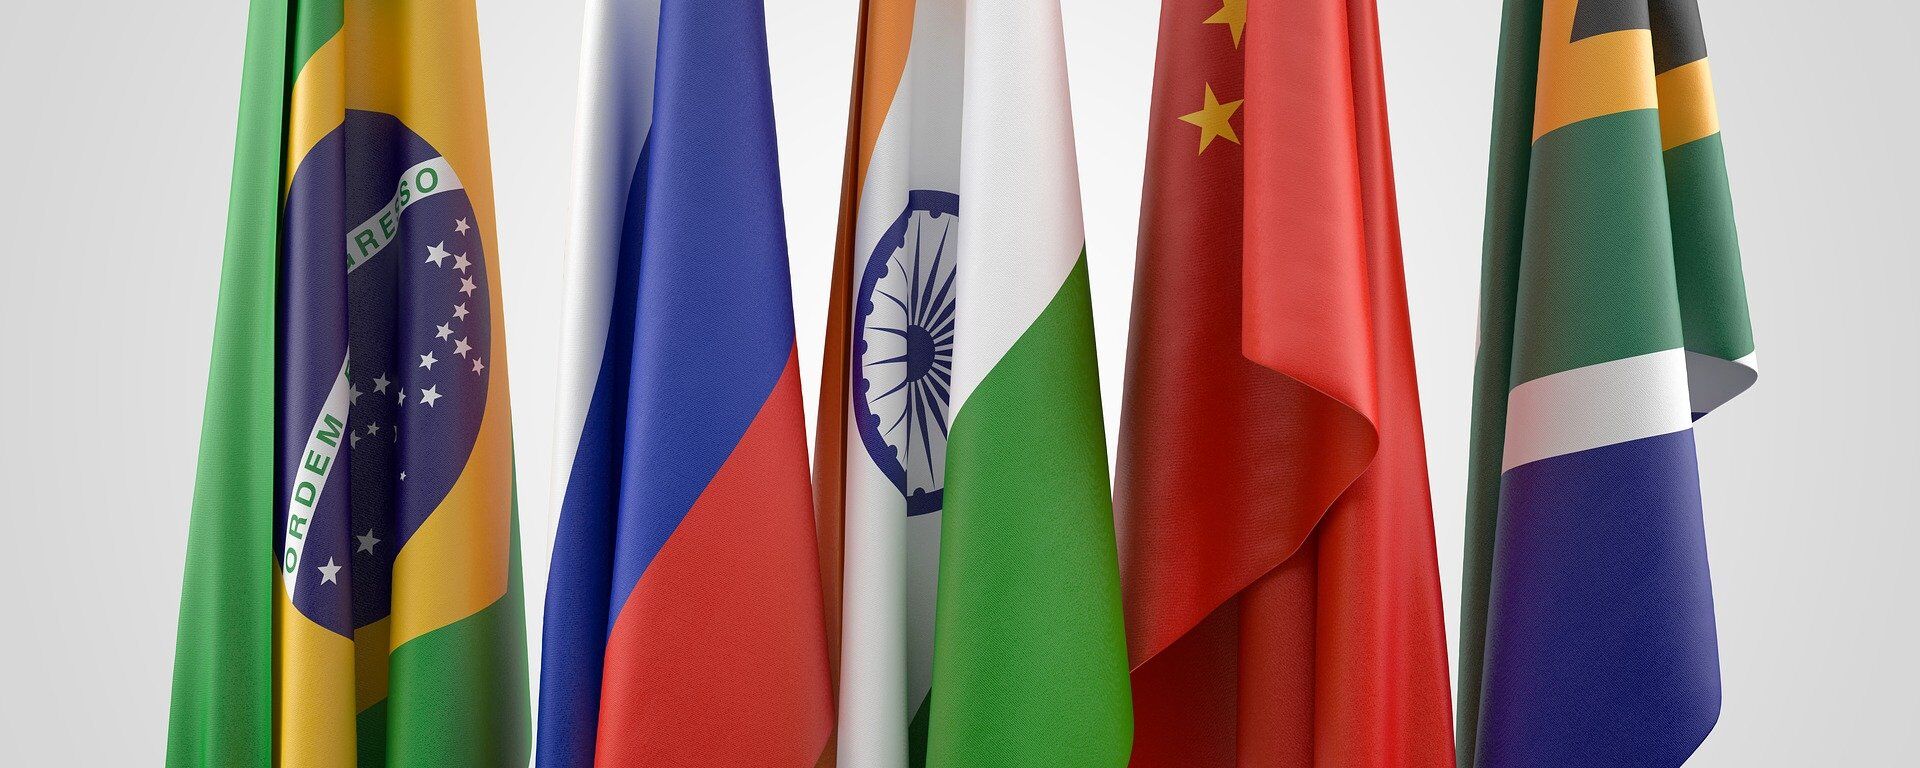 Banderas de los países BRICS: Brasil, Rusia, India, China y Sudáfrica - Sputnik Mundo, 1920, 14.07.2022